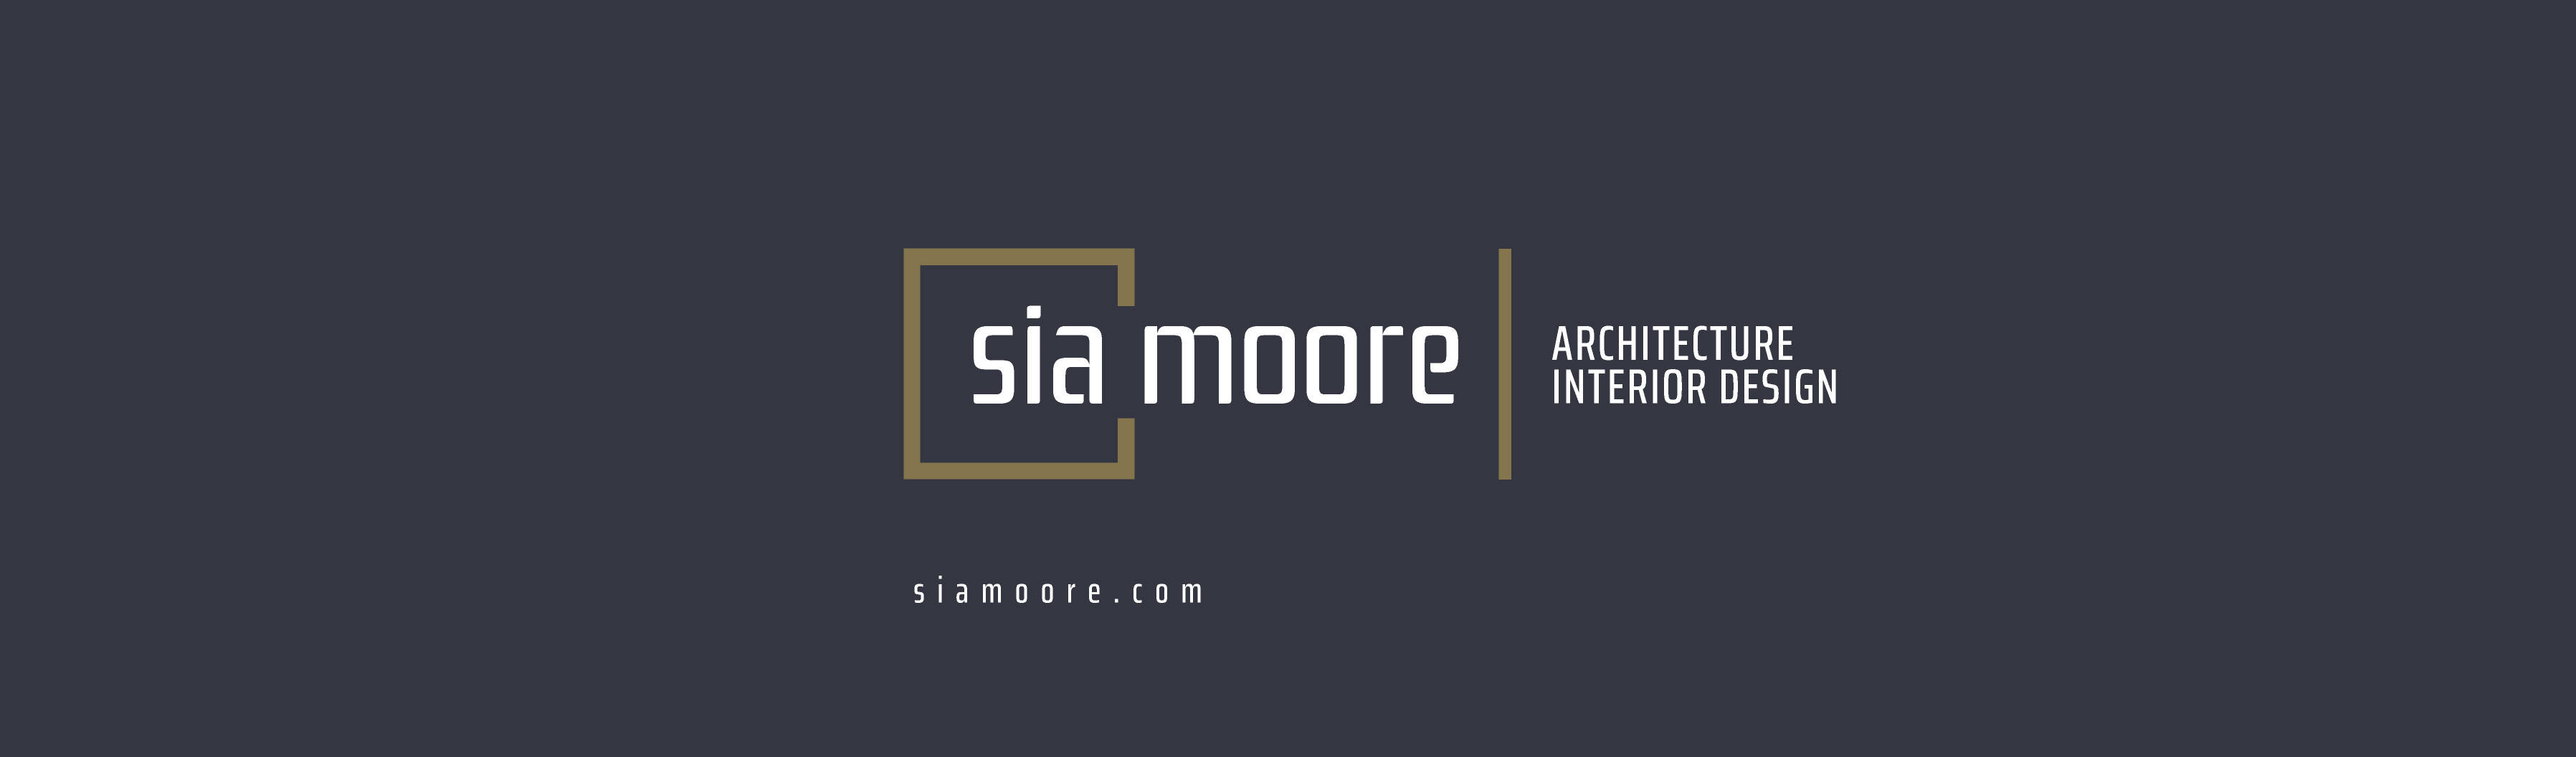 Sia Moore Archıtecture Interıor Desıgn